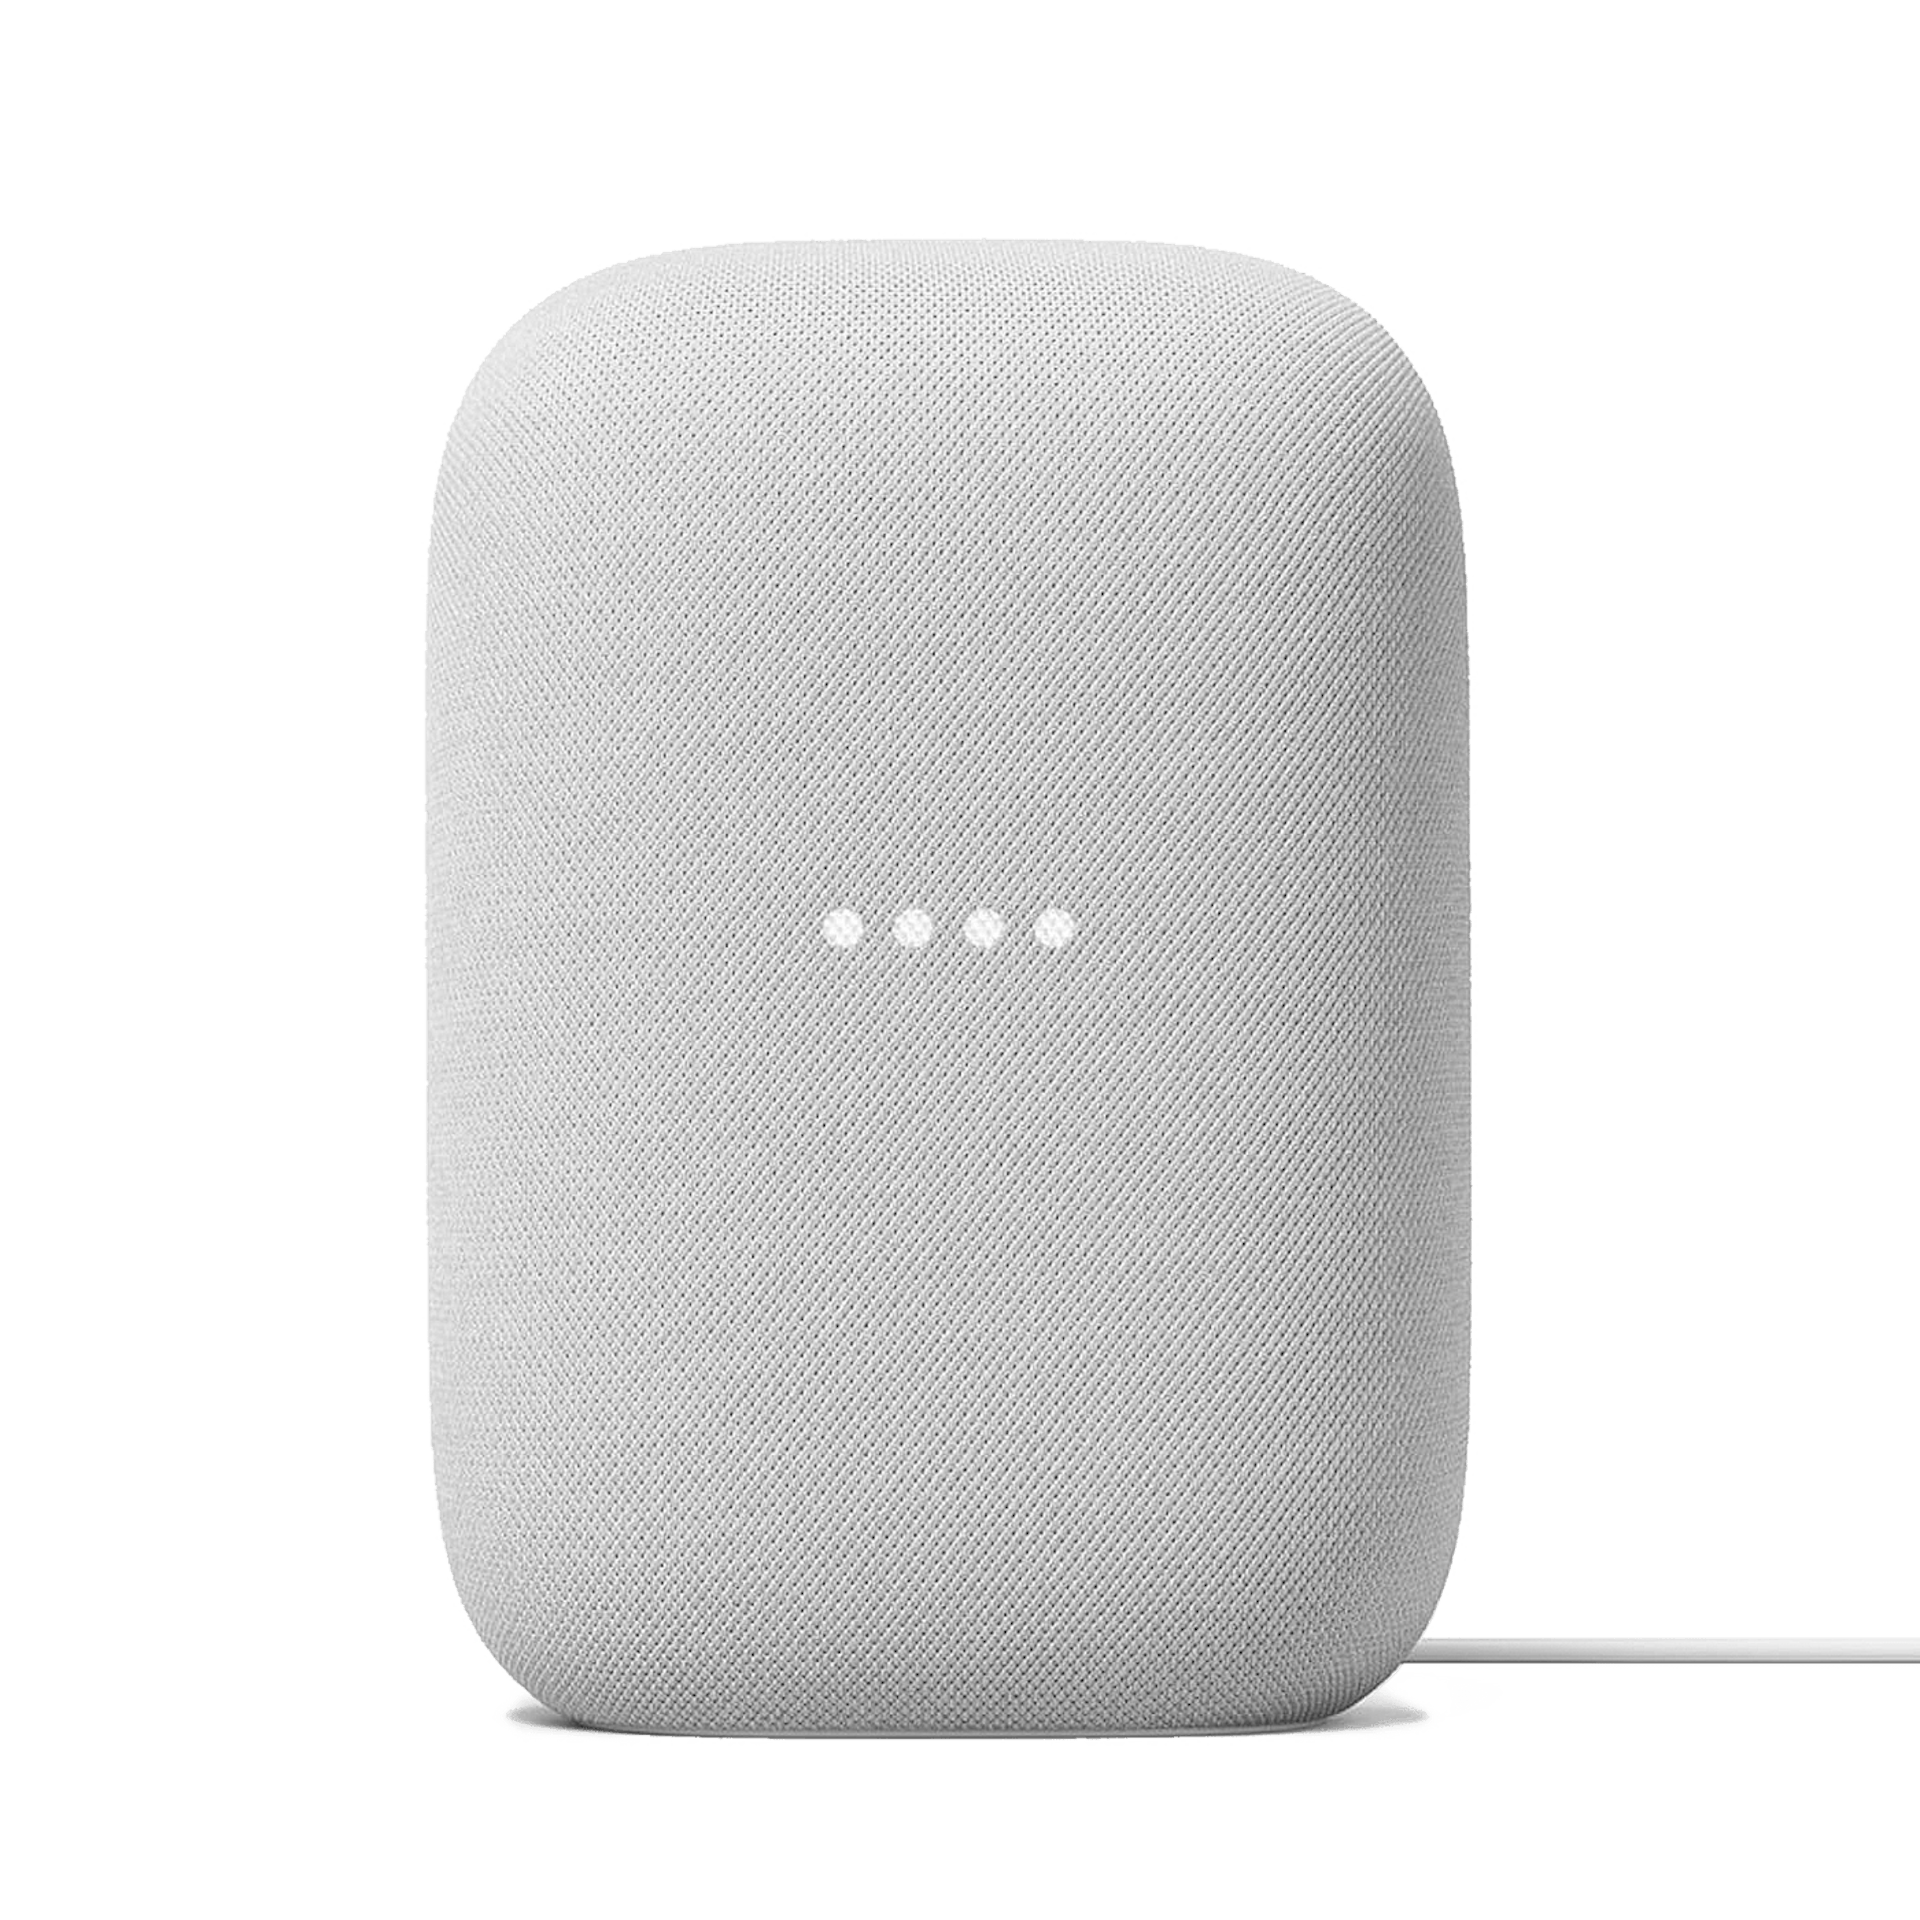 Google – Nest Audio